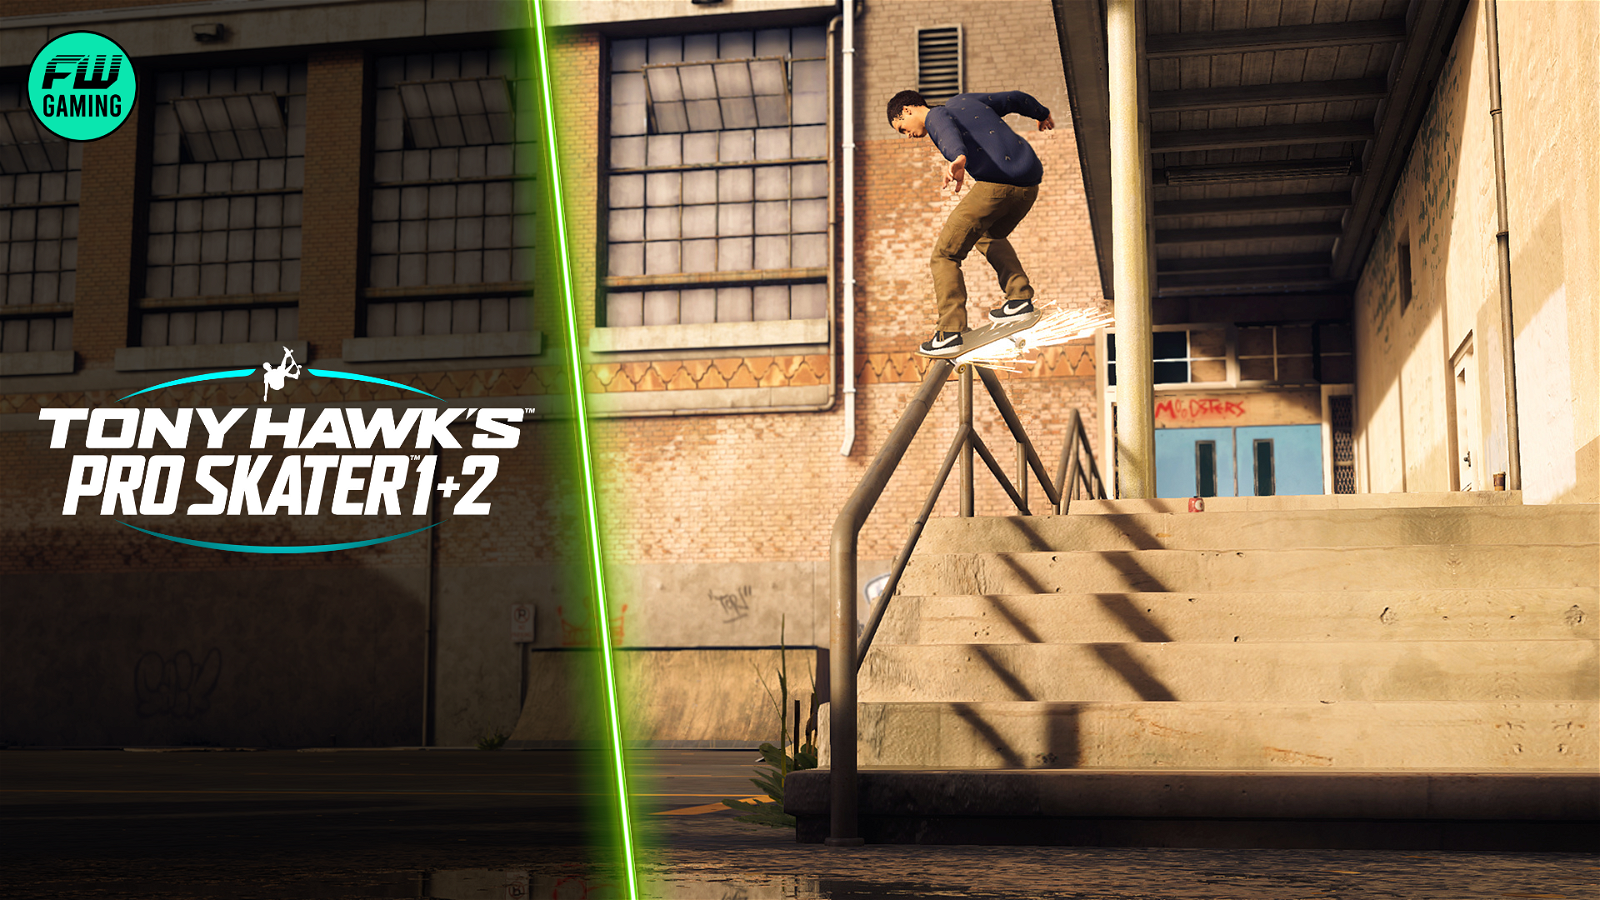 Tony Hawk's Pro Skater 1 + 2 Releasing on Steam in October